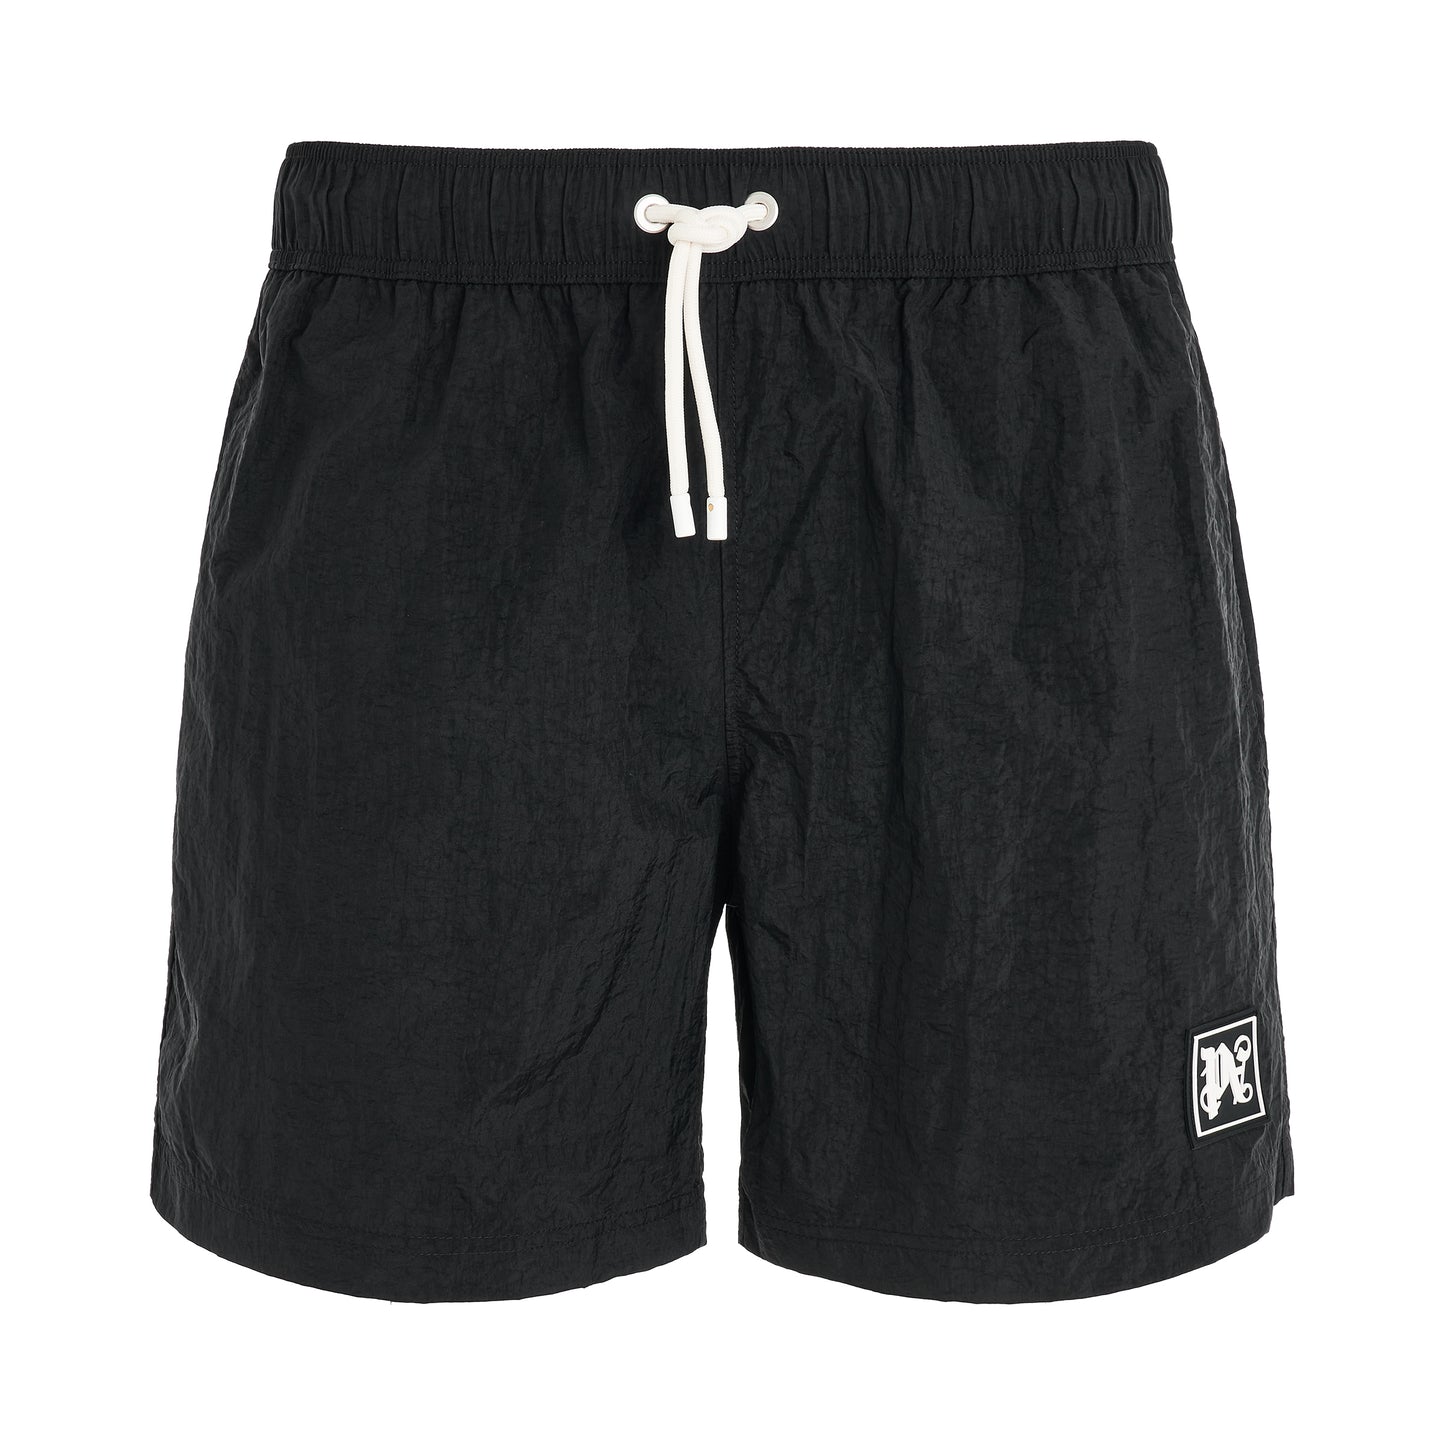 Monogram Swim shorts in Black/White